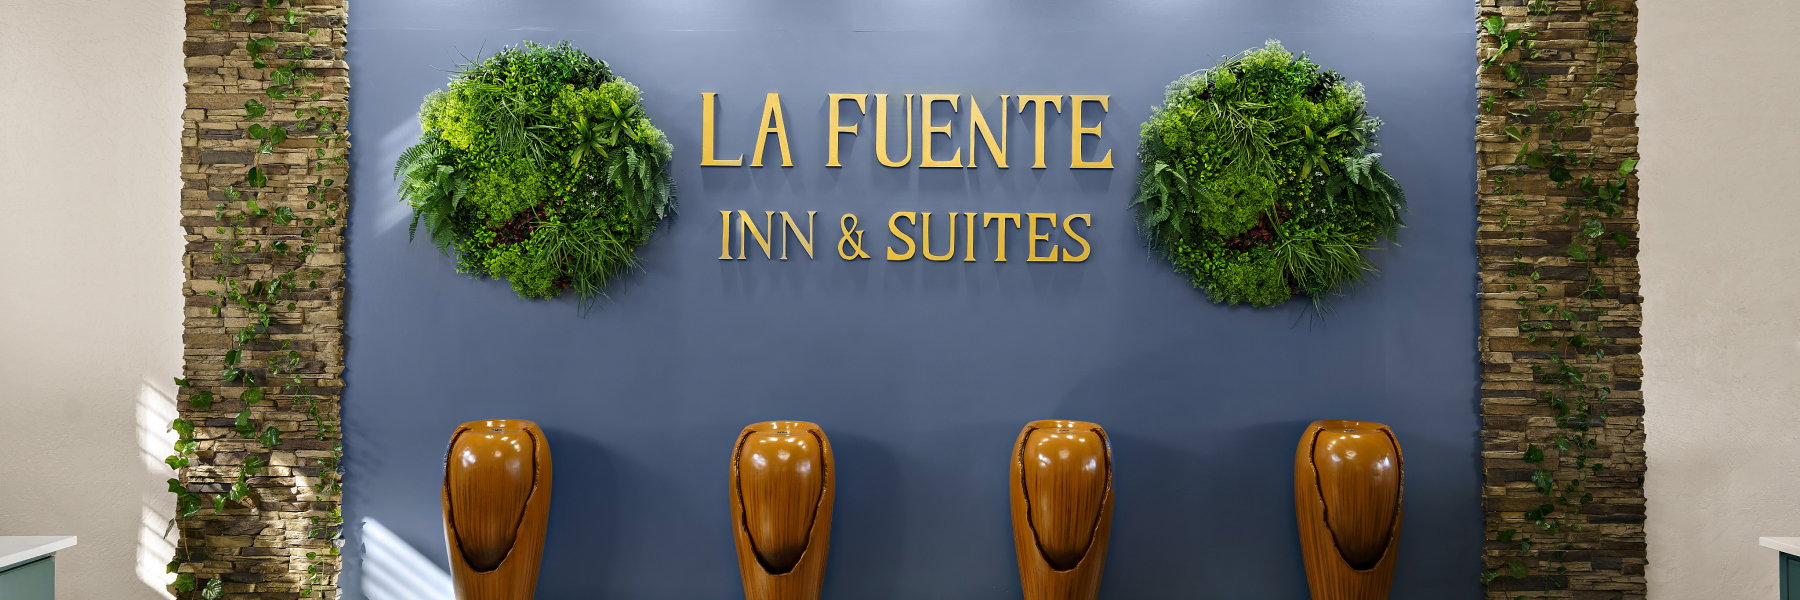 Offers at La Fuente Inn & Suites Hotel, Yuma, Arizona